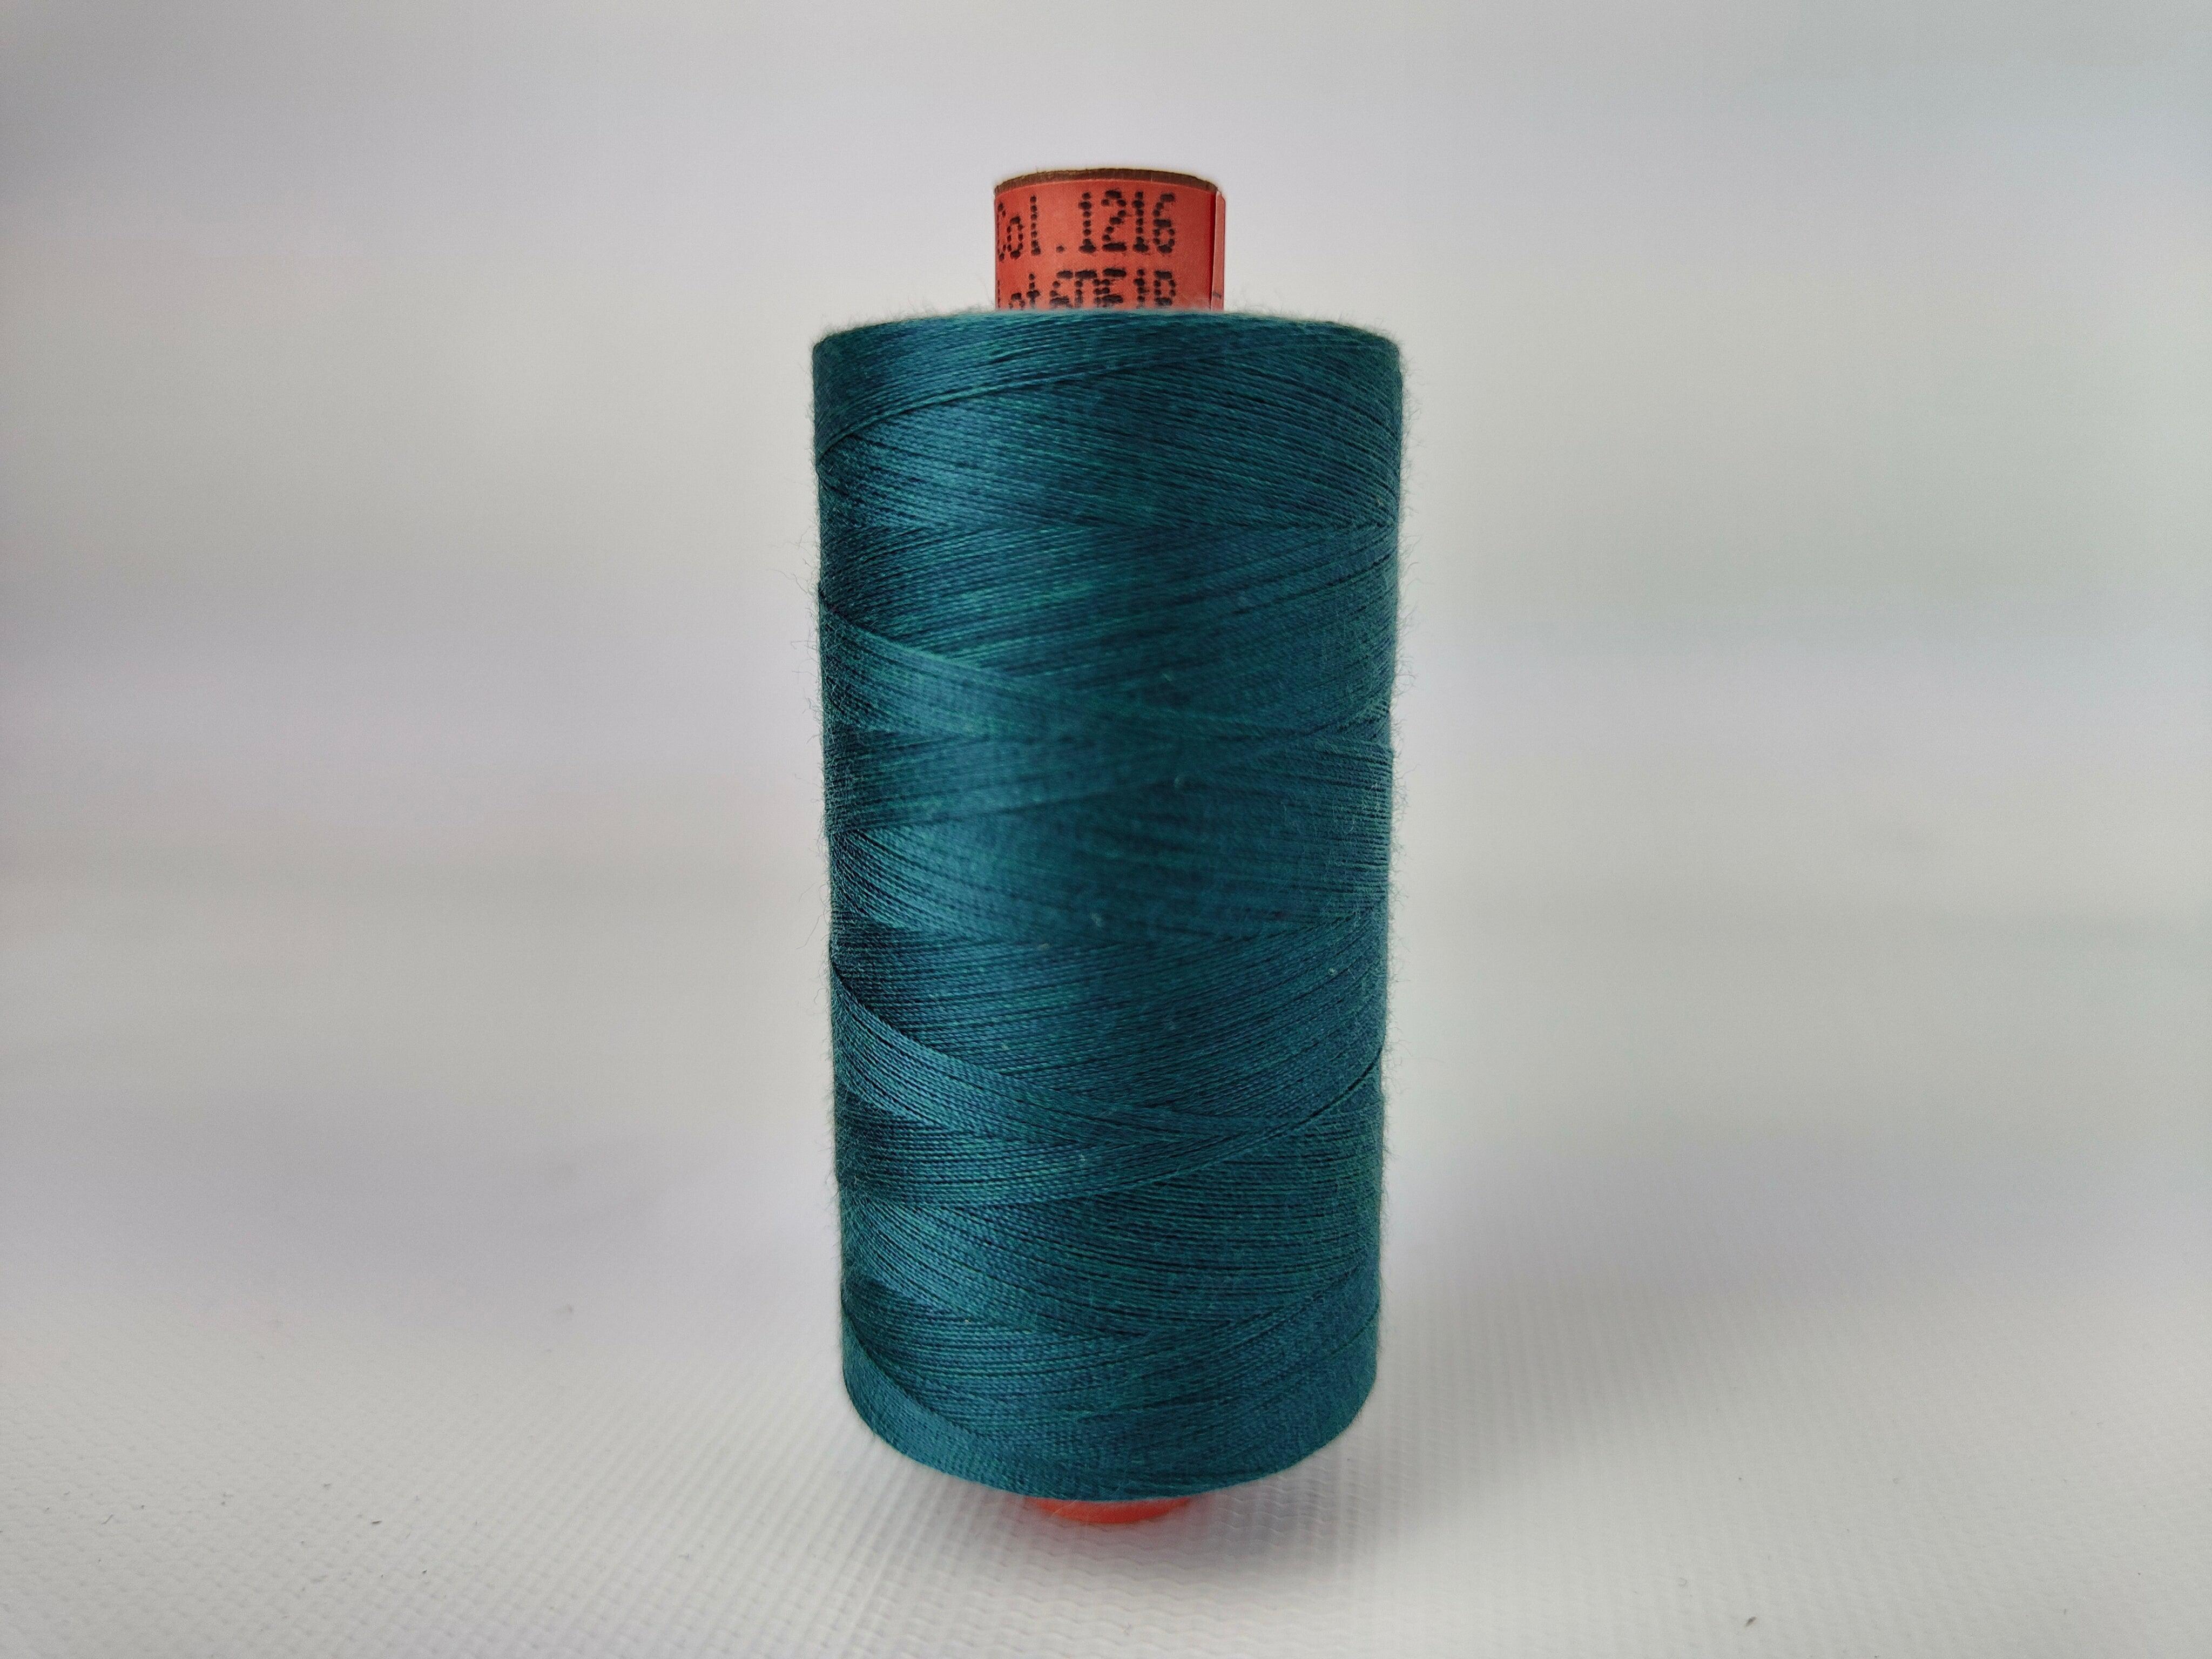 Rasant Thread Dark Grey Green #1216 (1000 metres) - Melco Fabrics